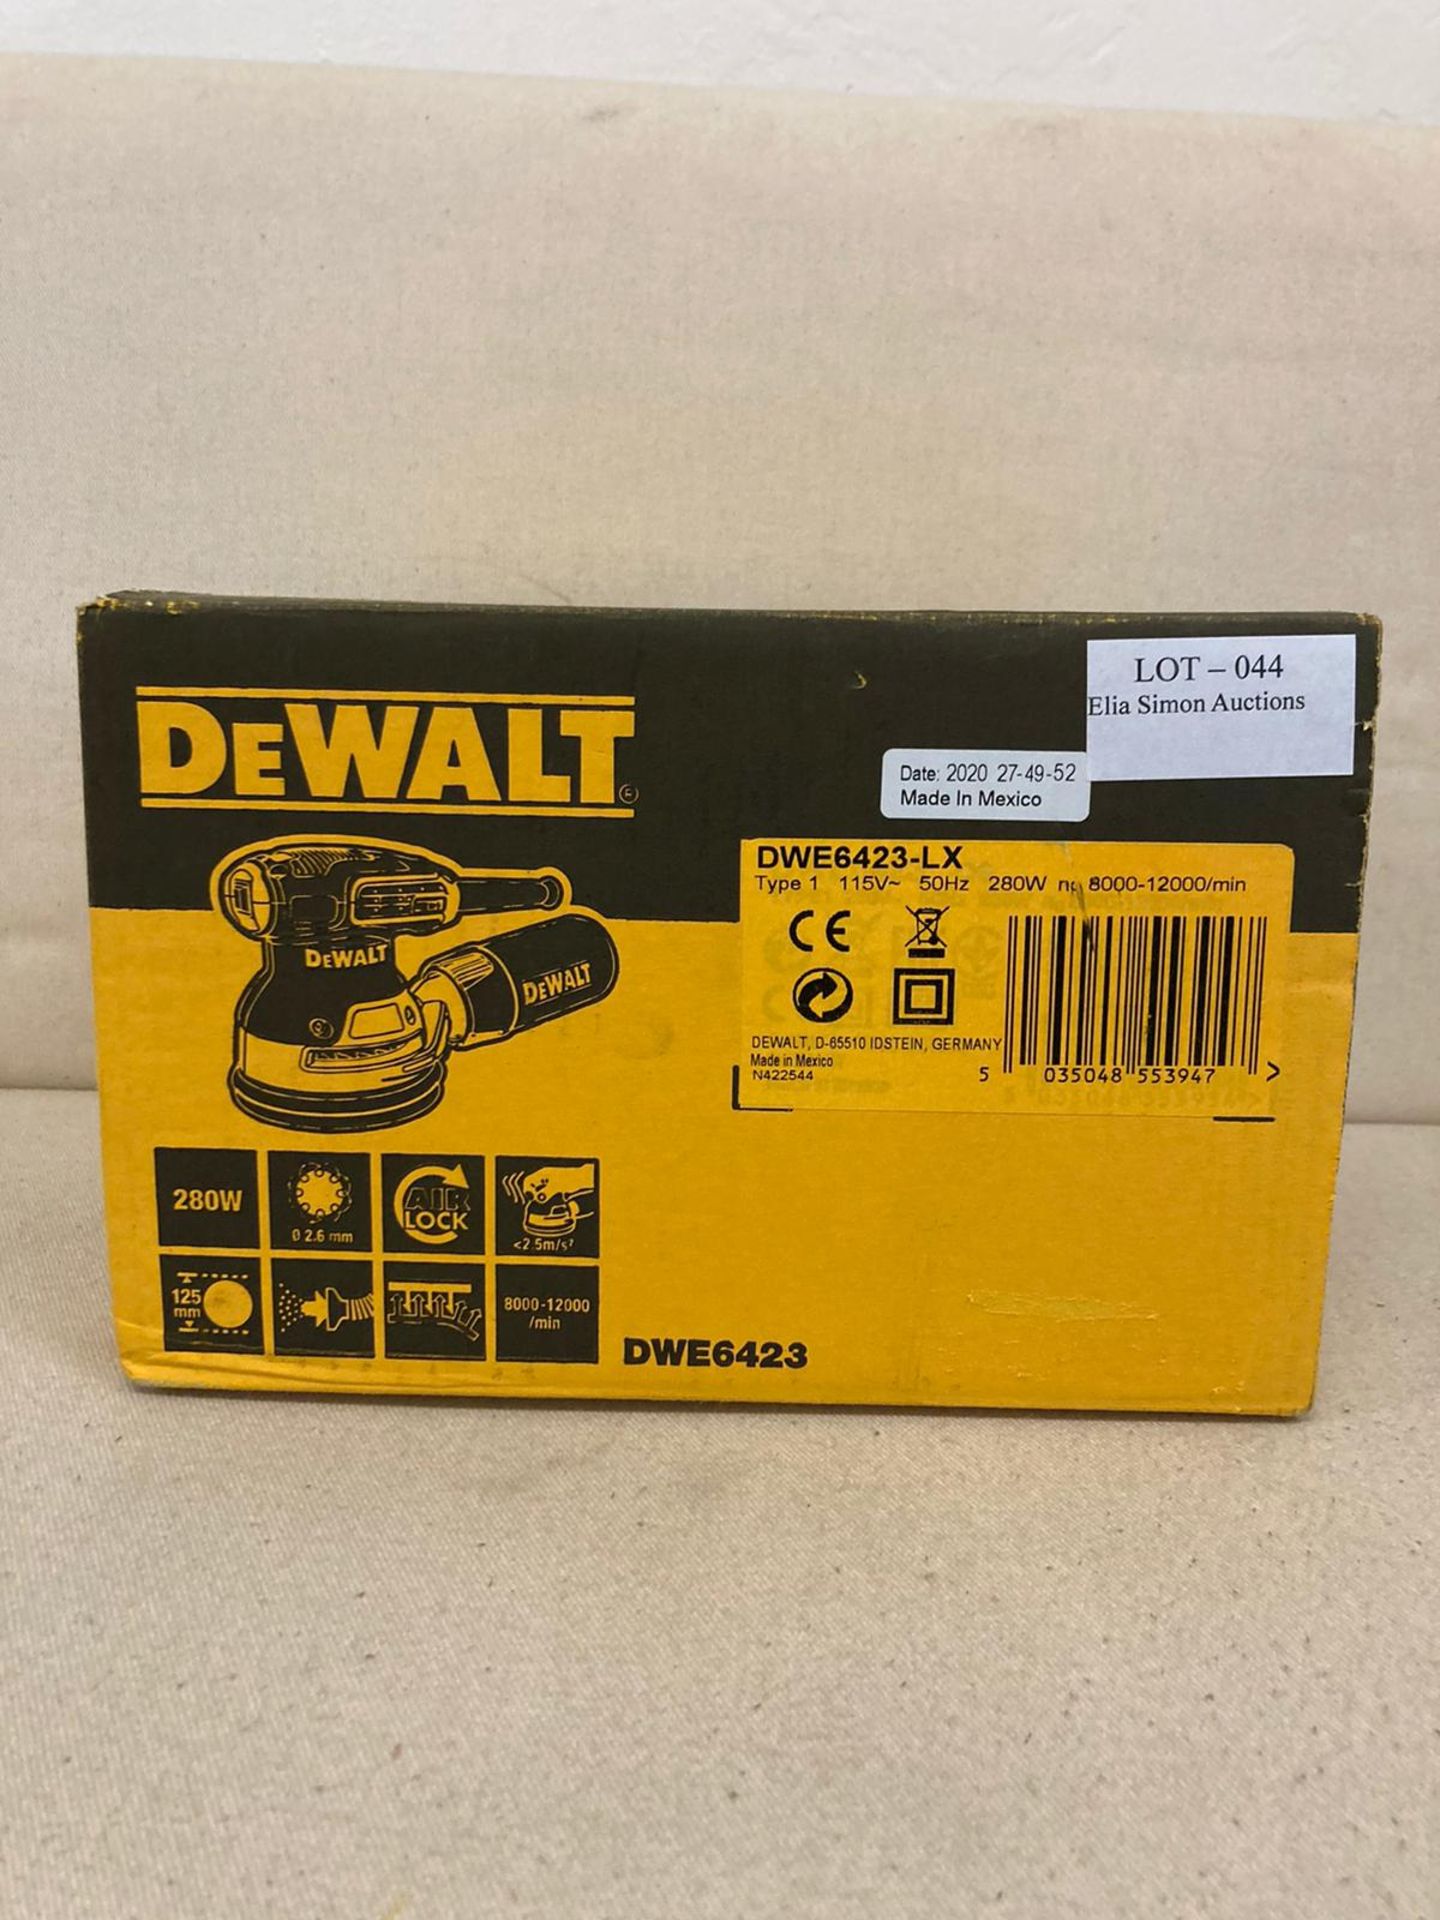 DEWALT DWE6423-LX ELECTRIC RANDOM ORBIT SANDER 280W